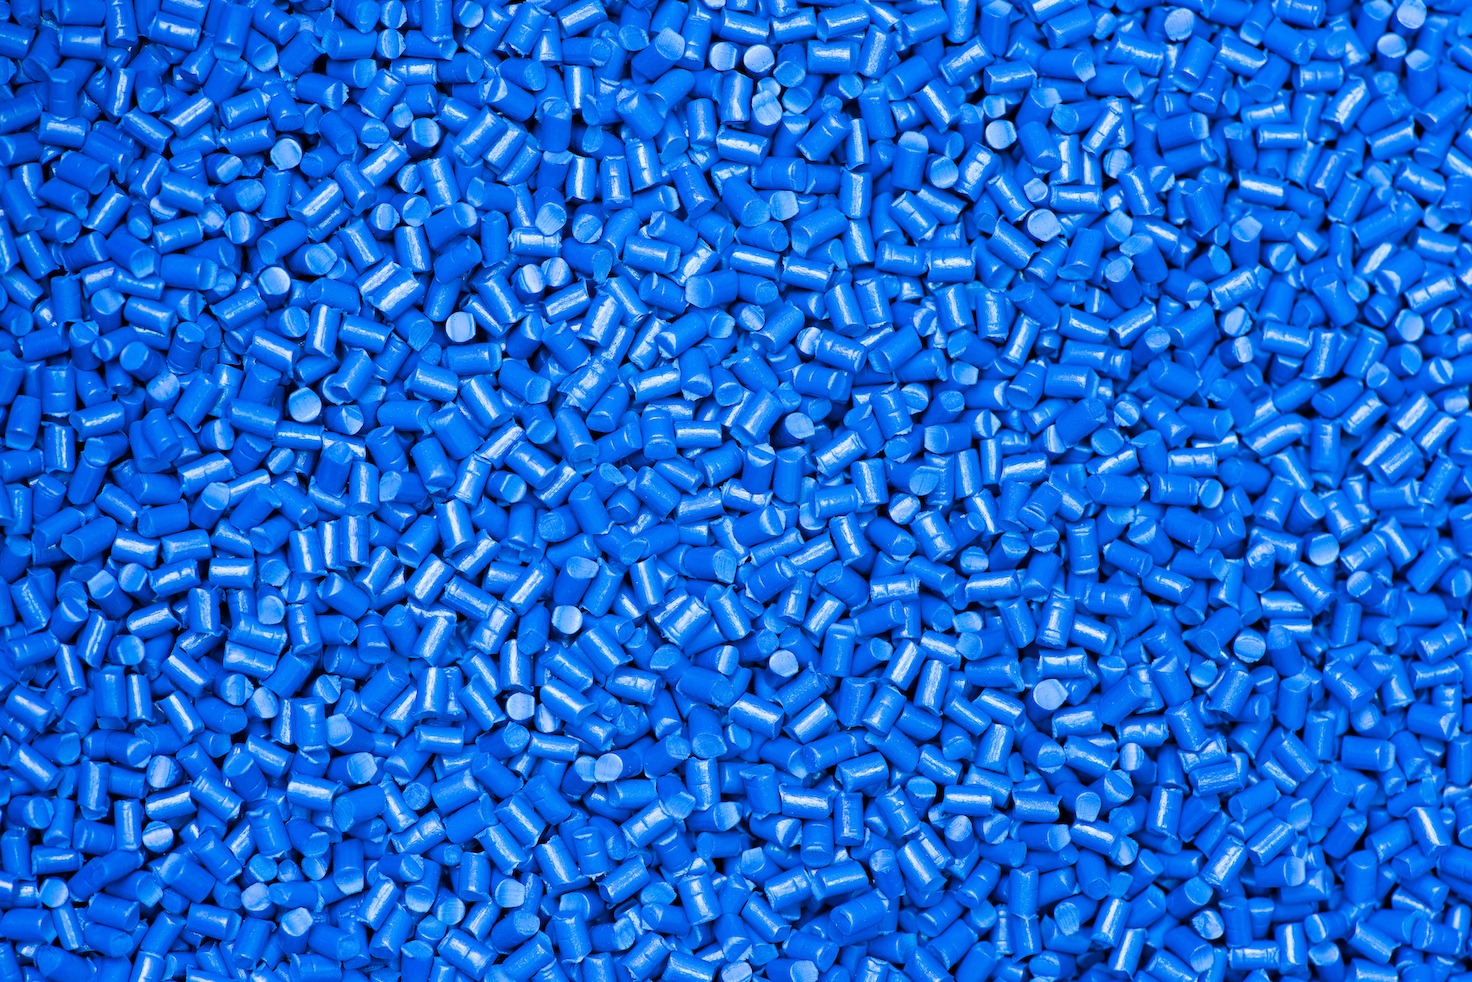 Blue coloured small plastic parts